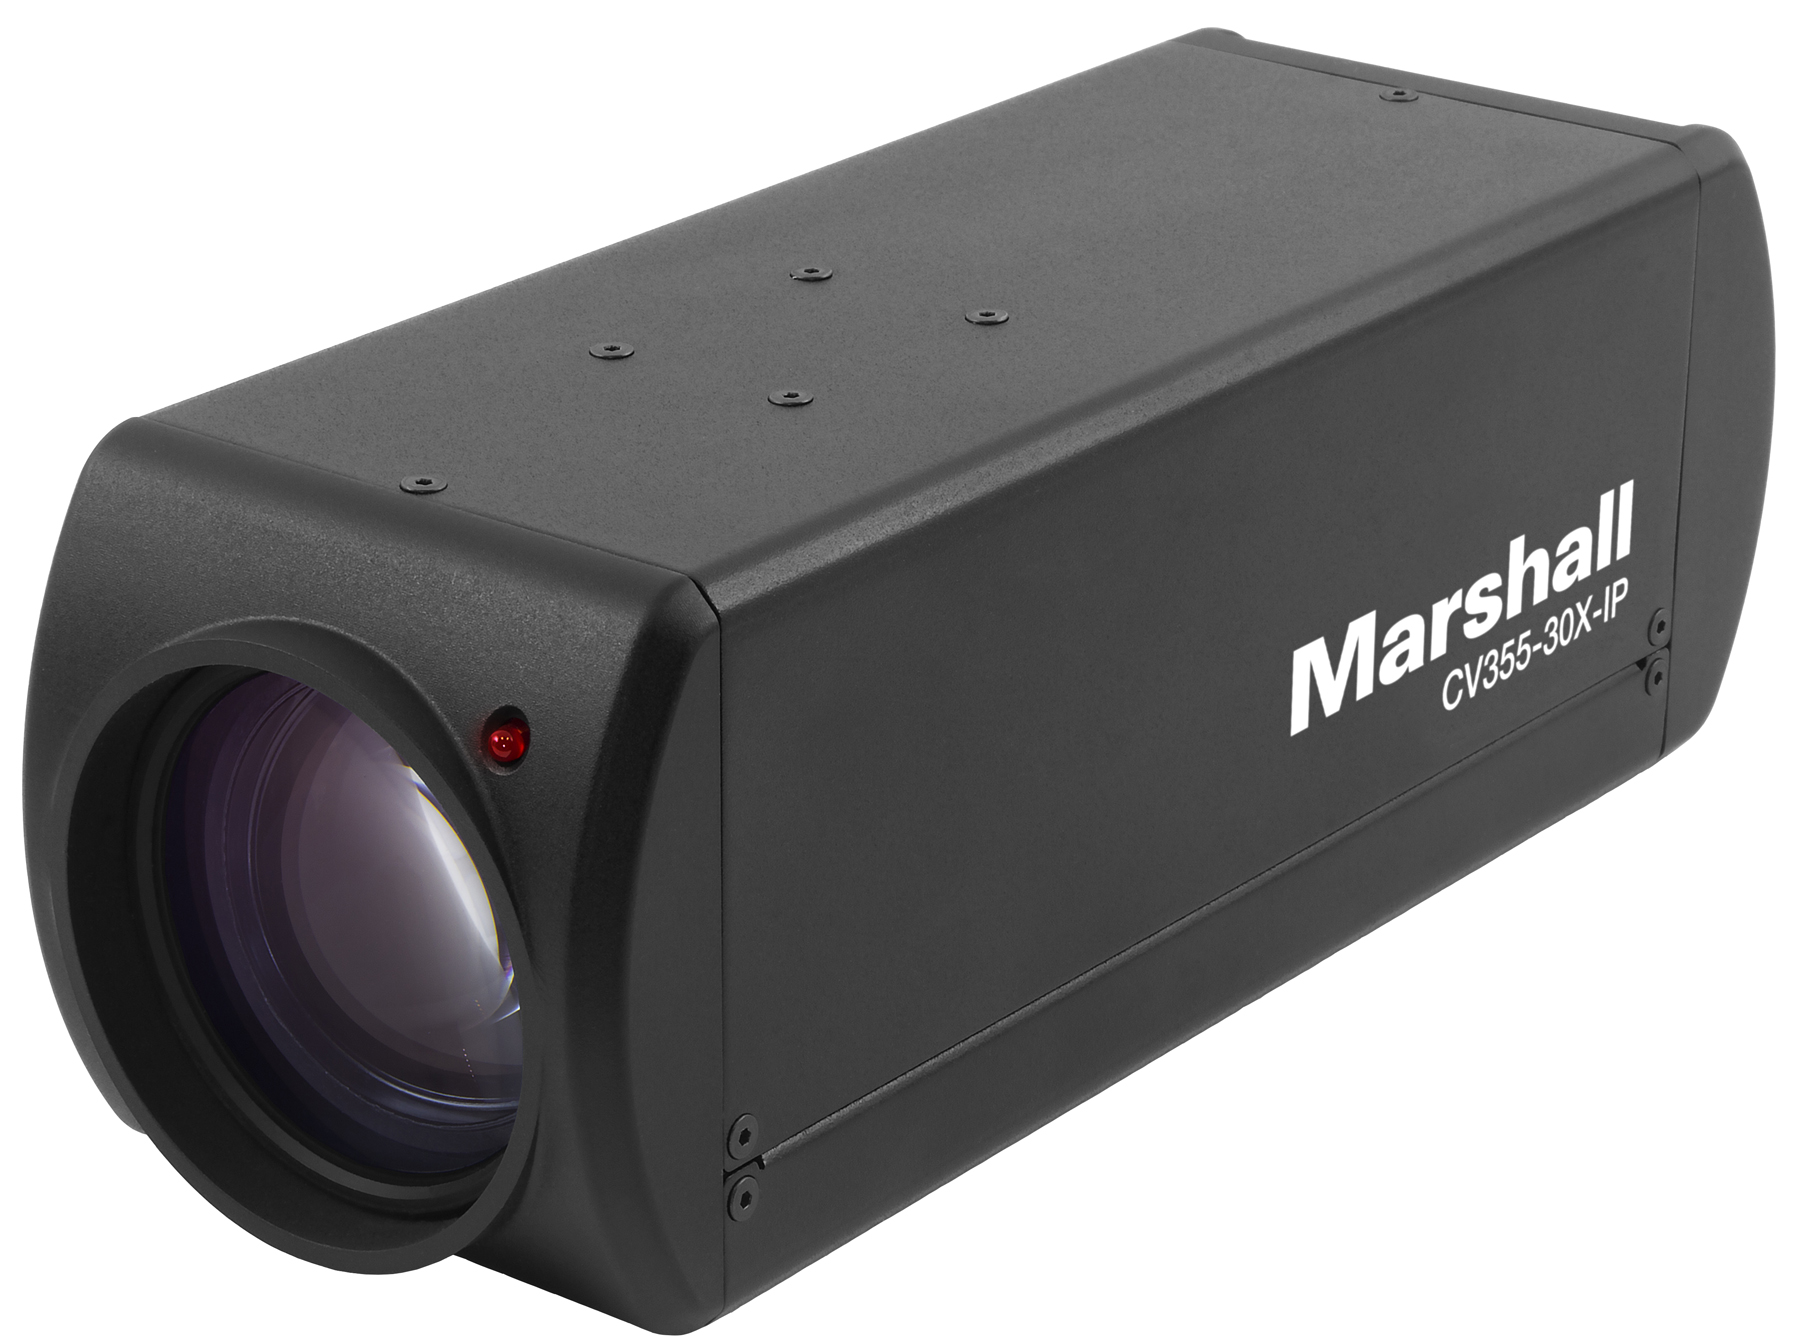 Marshall Electronics New IP Cameras